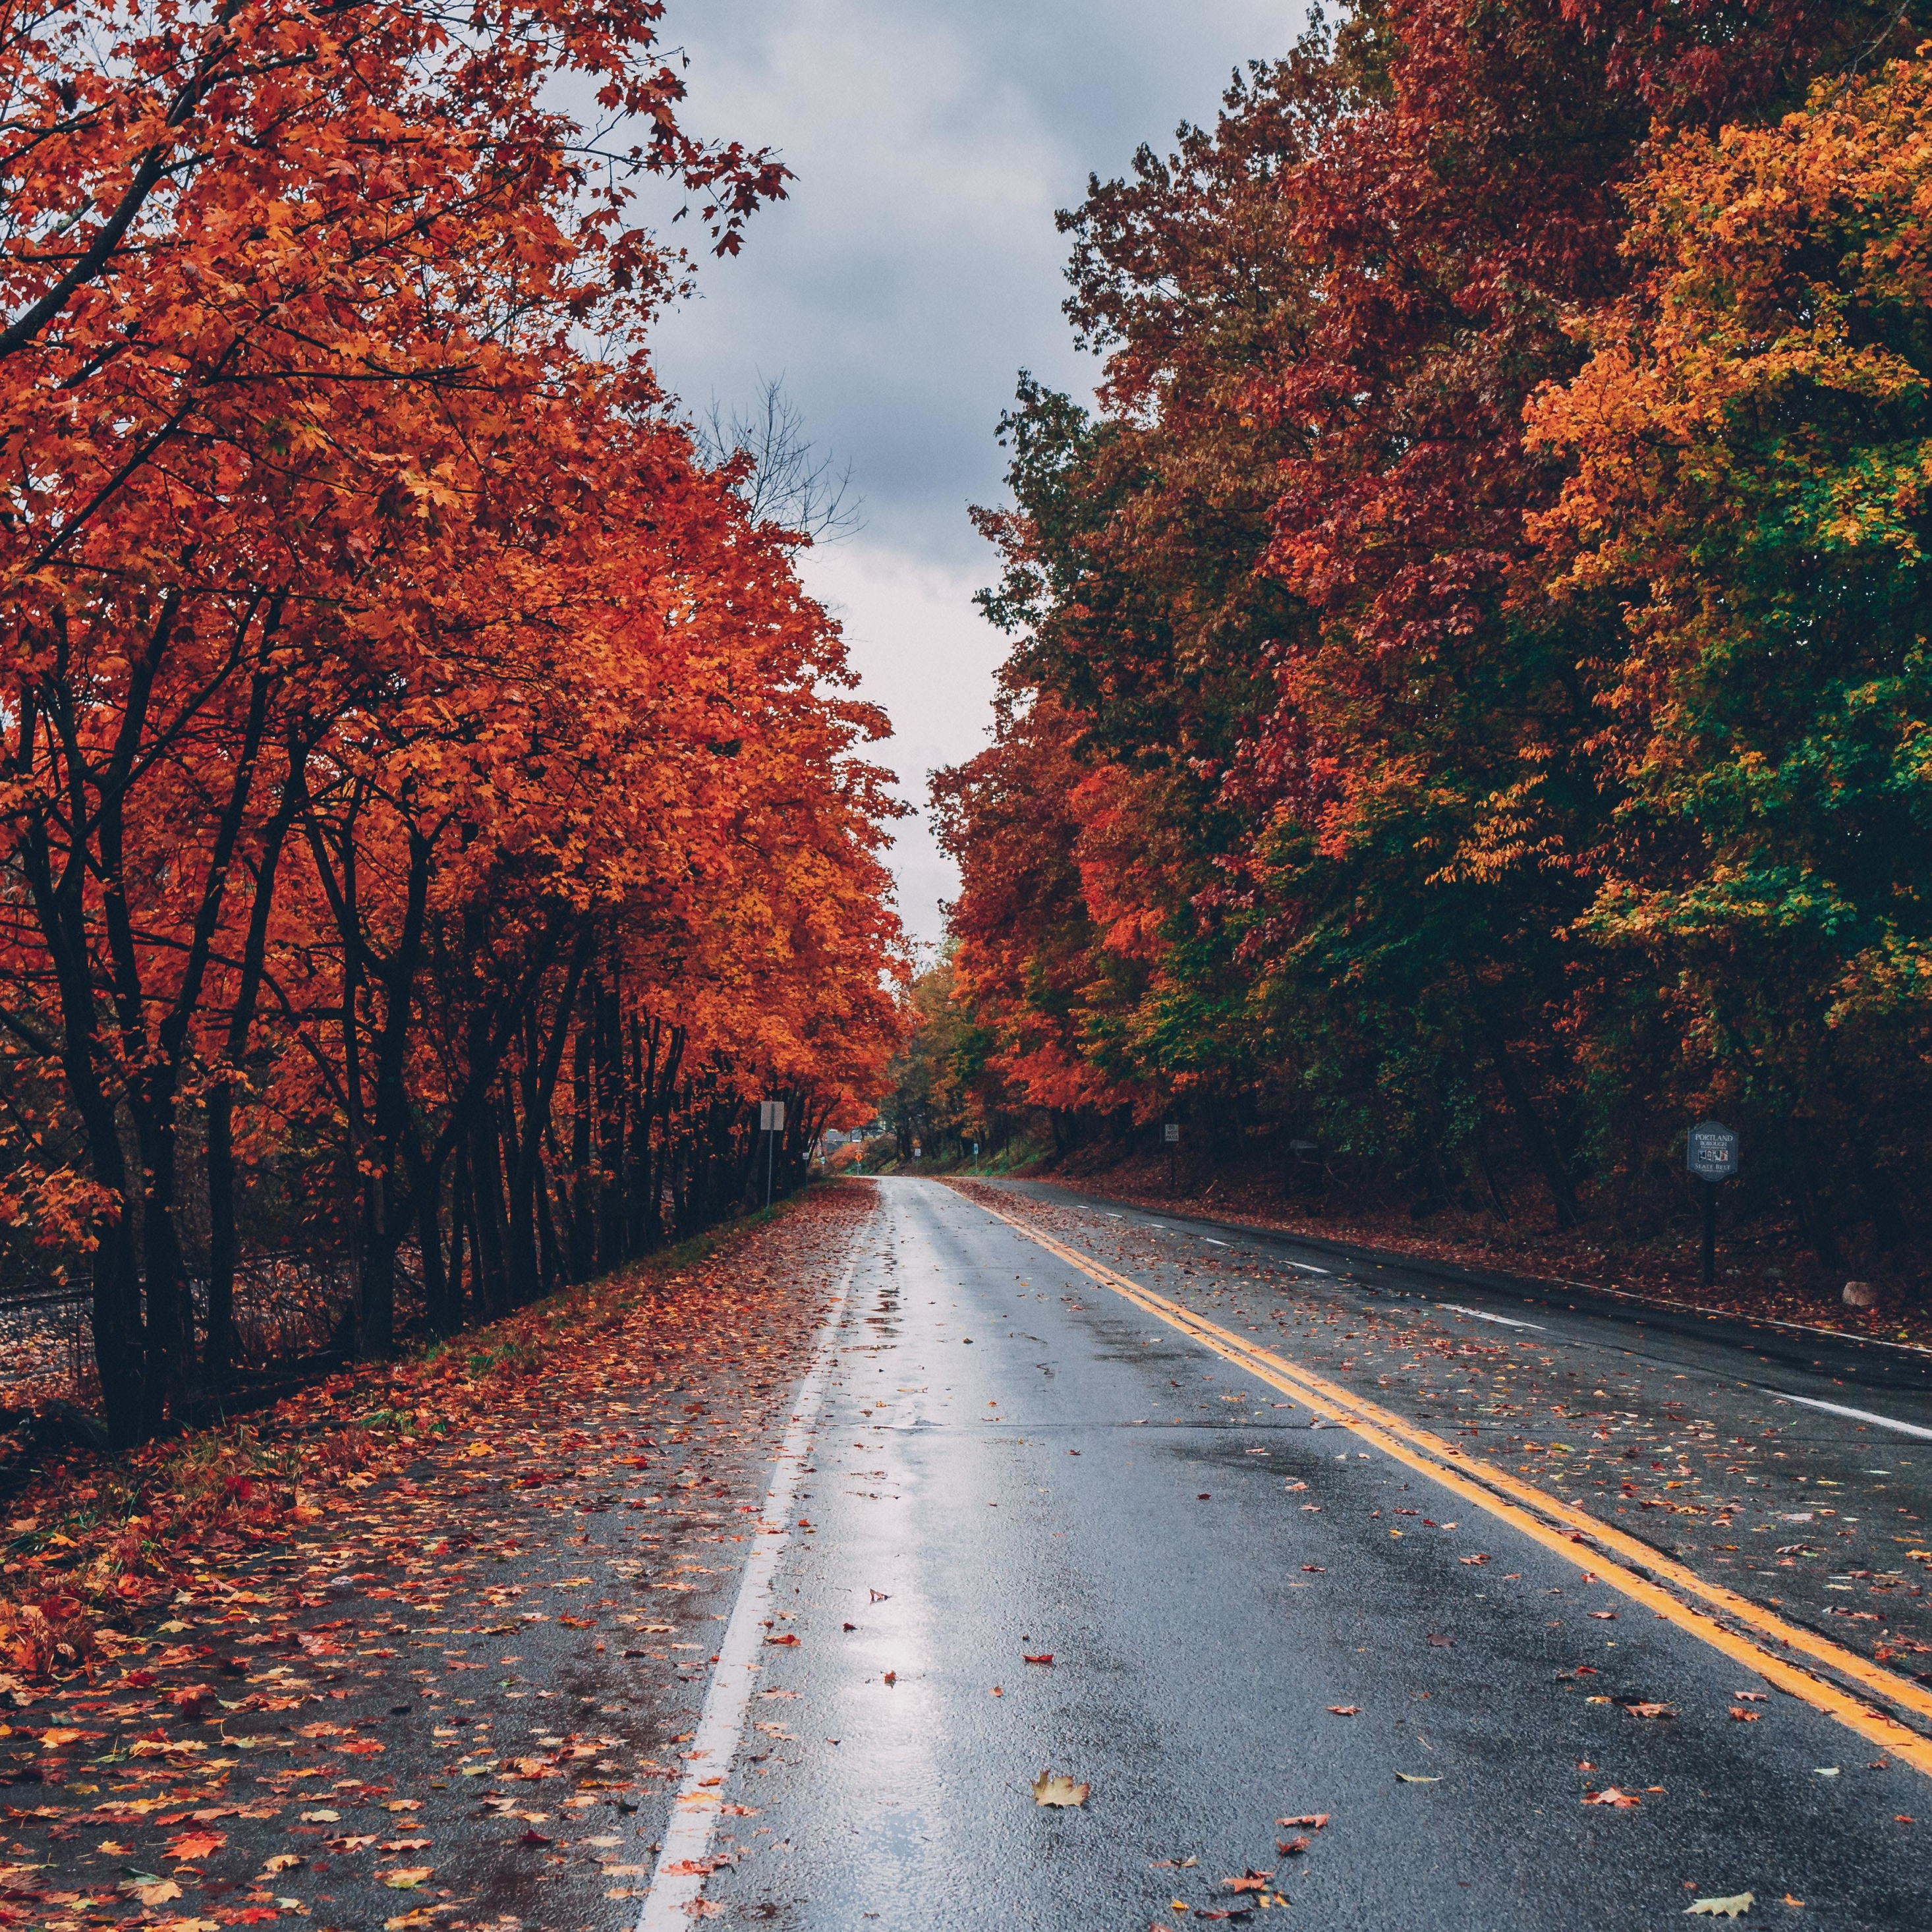 Download road, autumn, tree, highway 2932x2932 wallpaper, ipad pro retina, 2932x2932 image, background, 18379